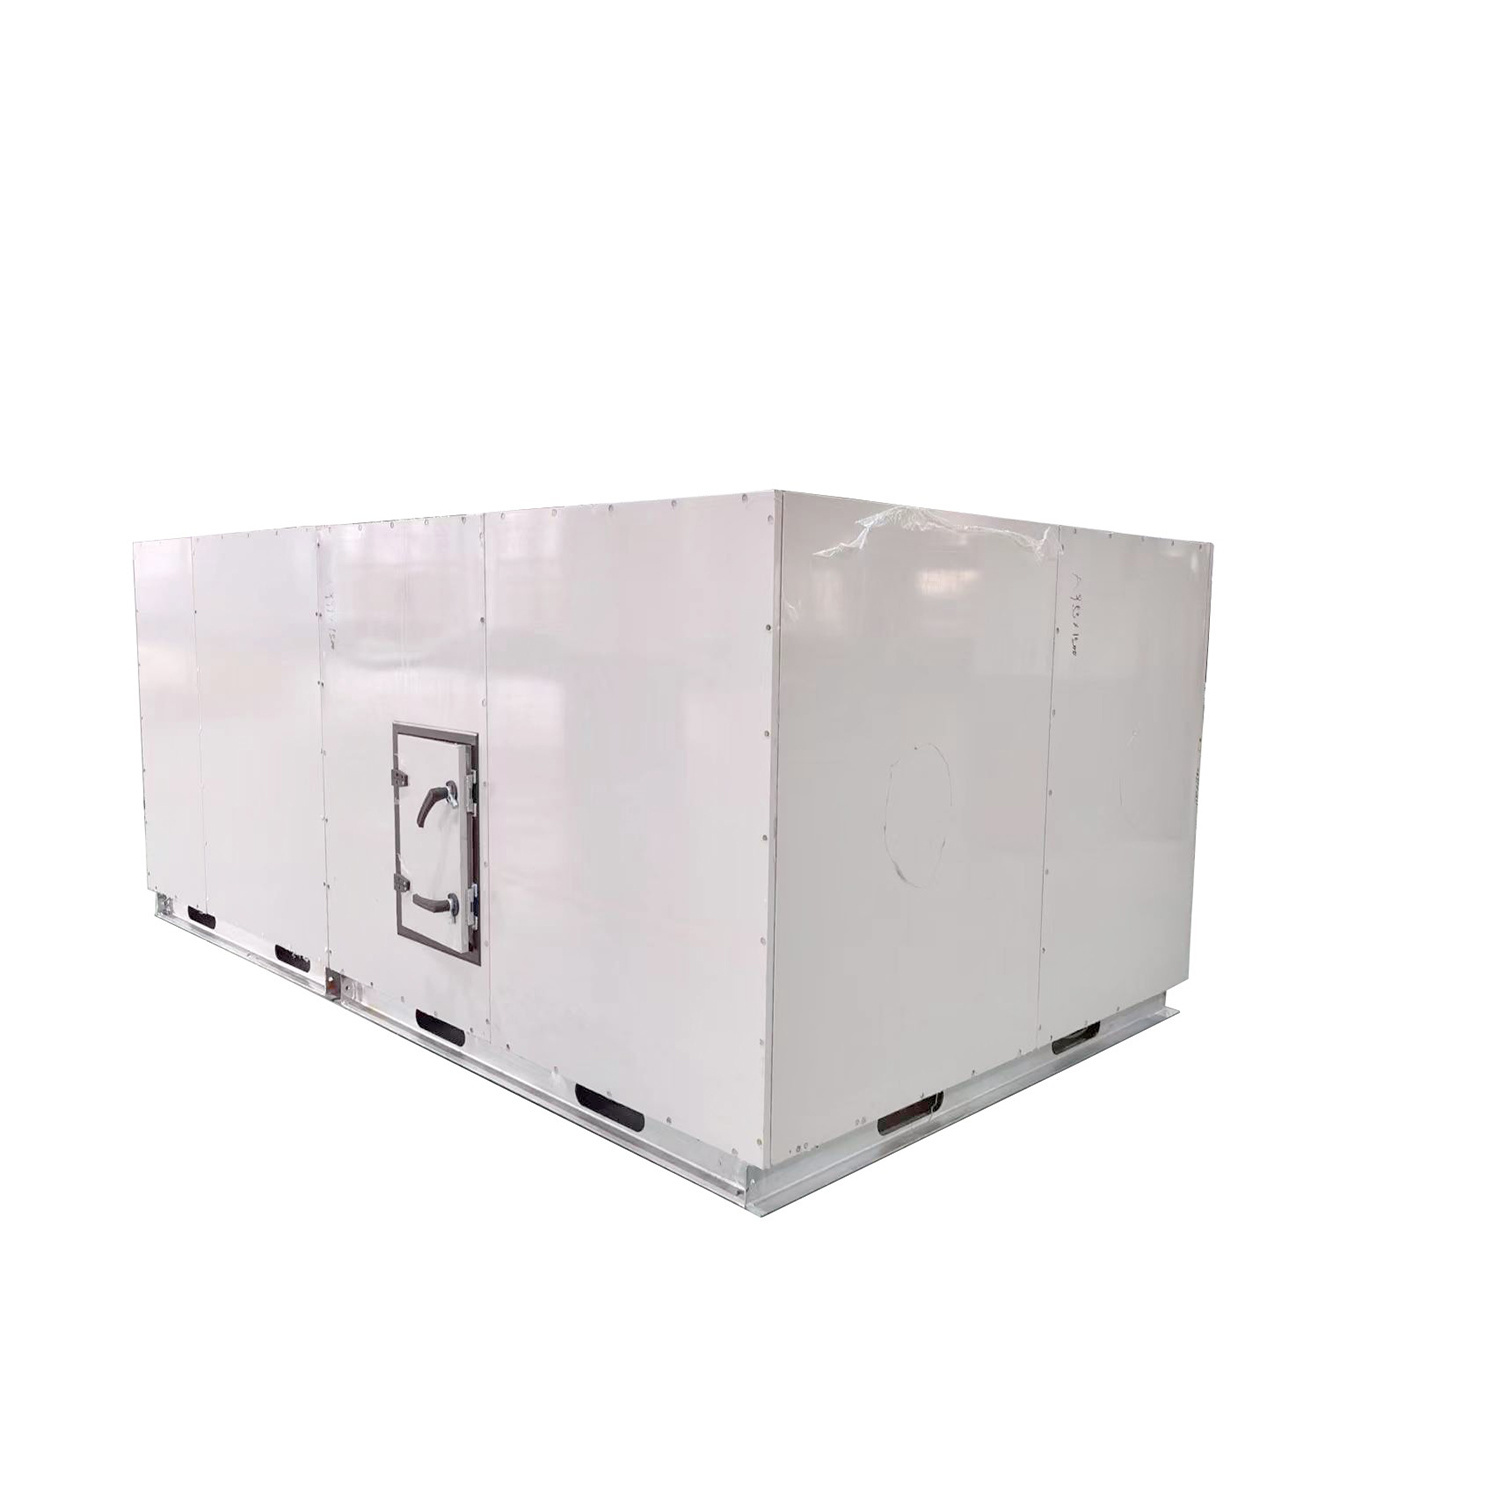 Refrigeration air conditioning box